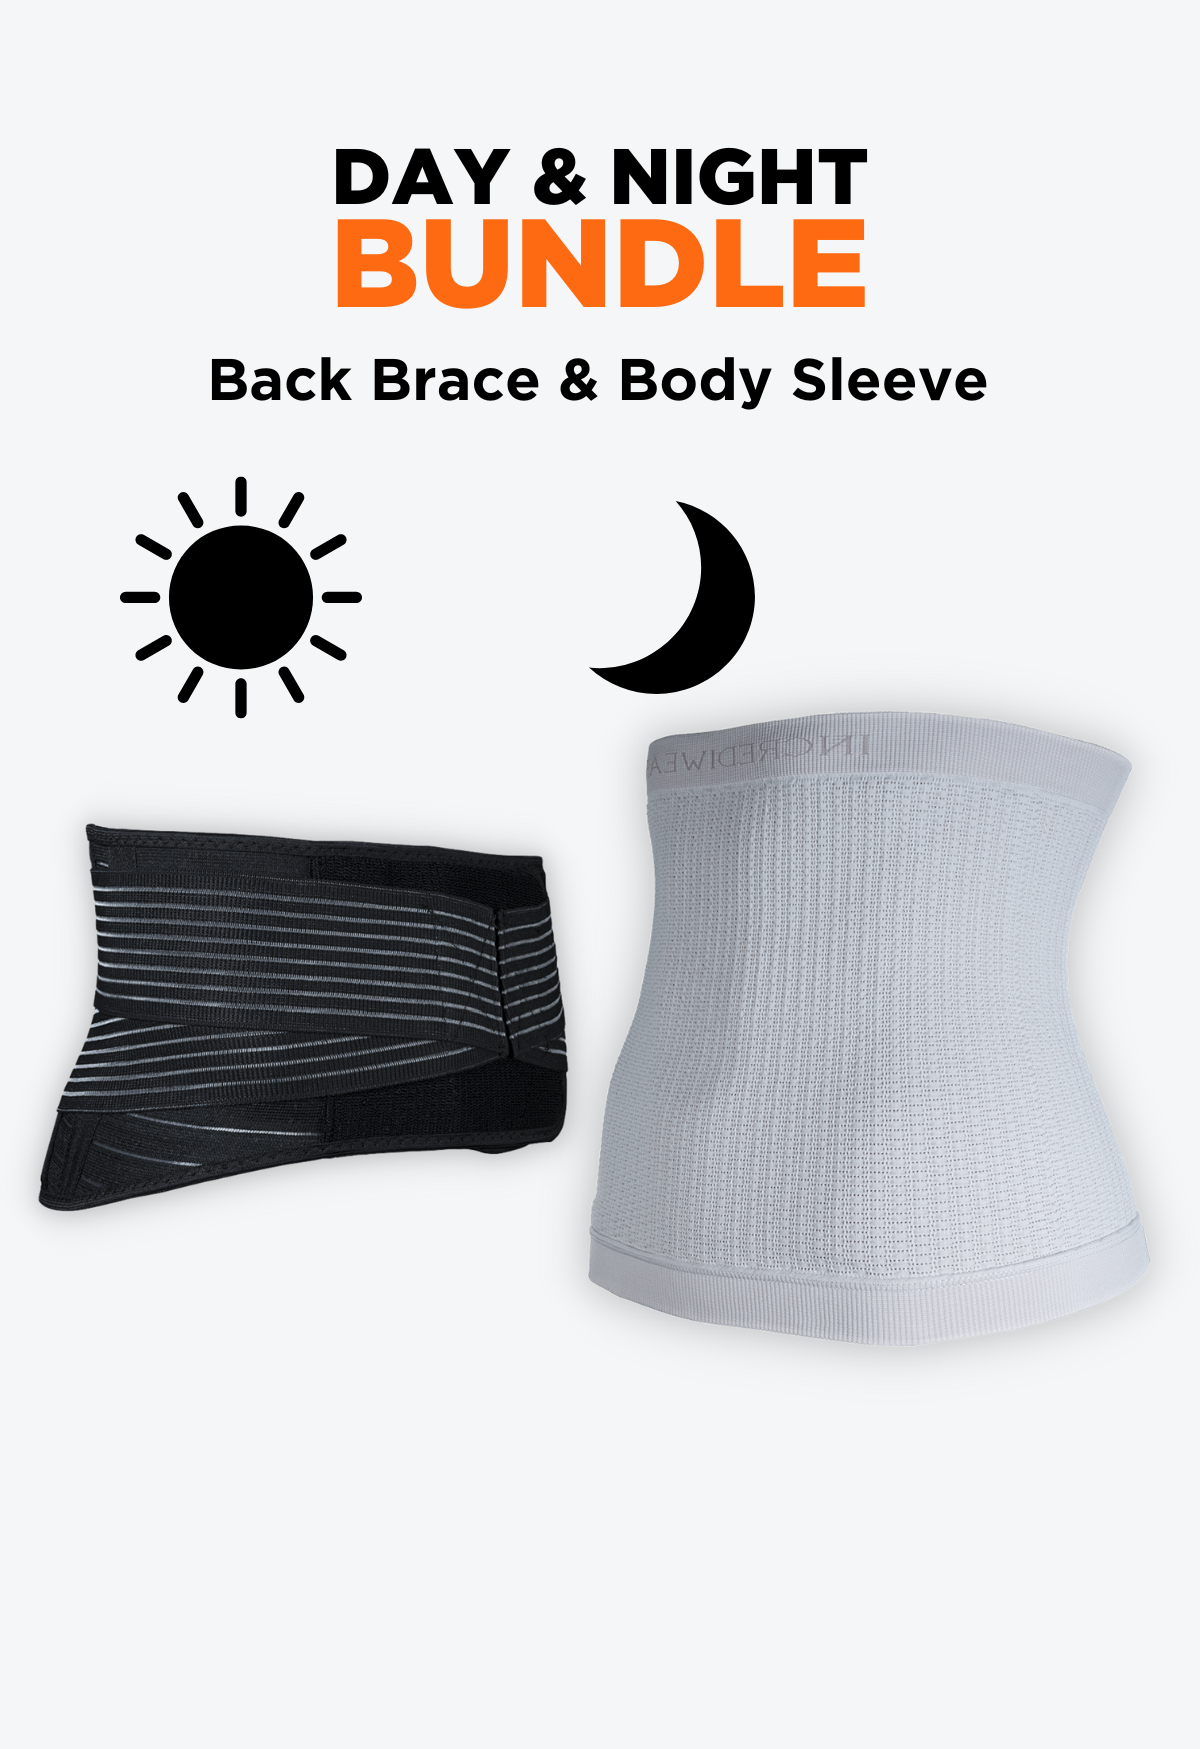 Back Brace and Body Sleeve Bundle – Incrediwear Ireland